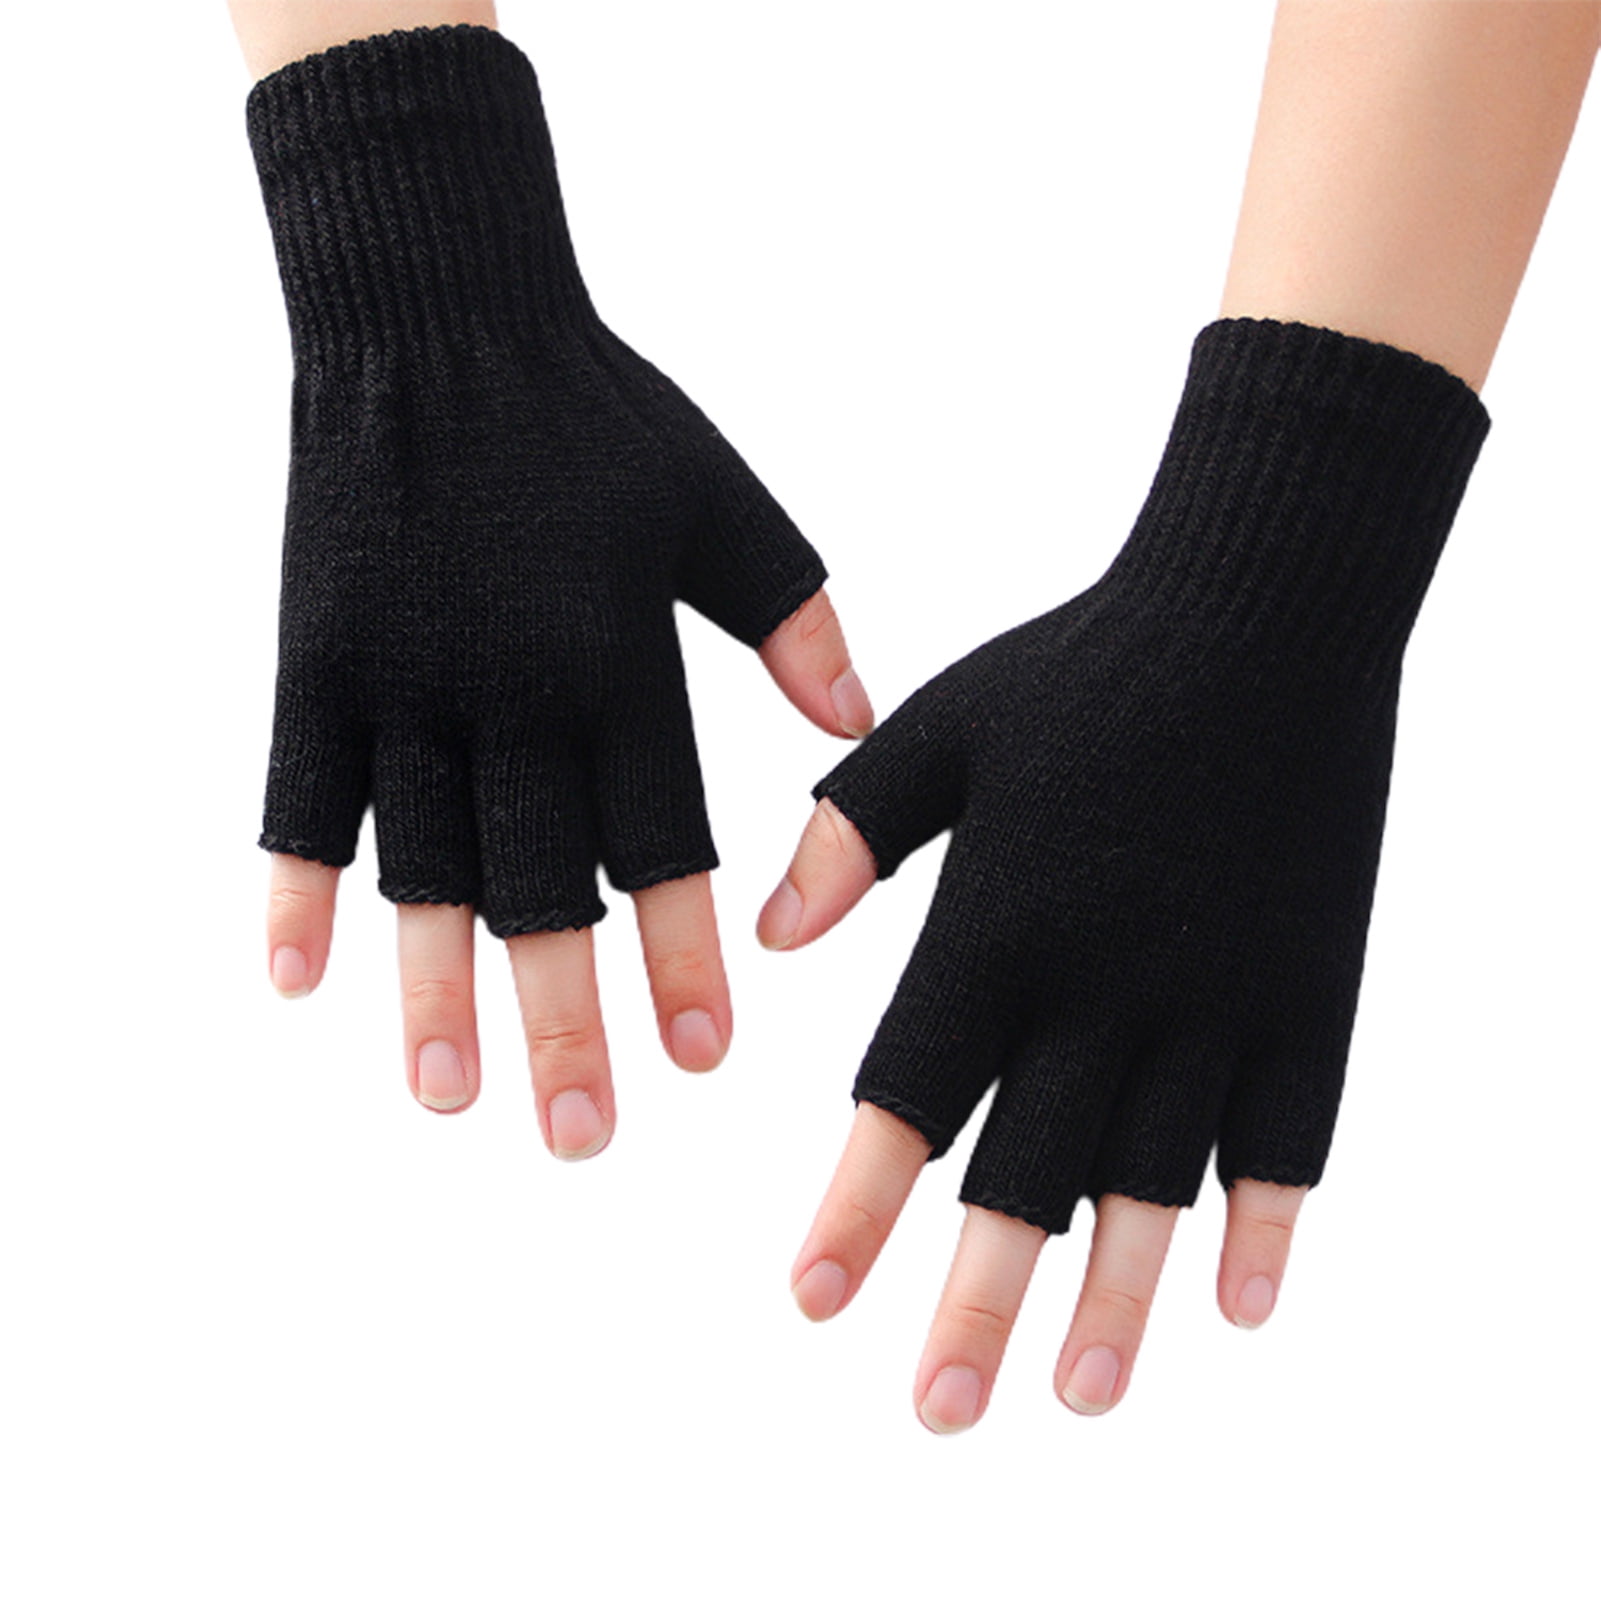 Details about   Solid Color Kids Winter Soft Plush Half Finger Fingerless Warm Gloves NEW 